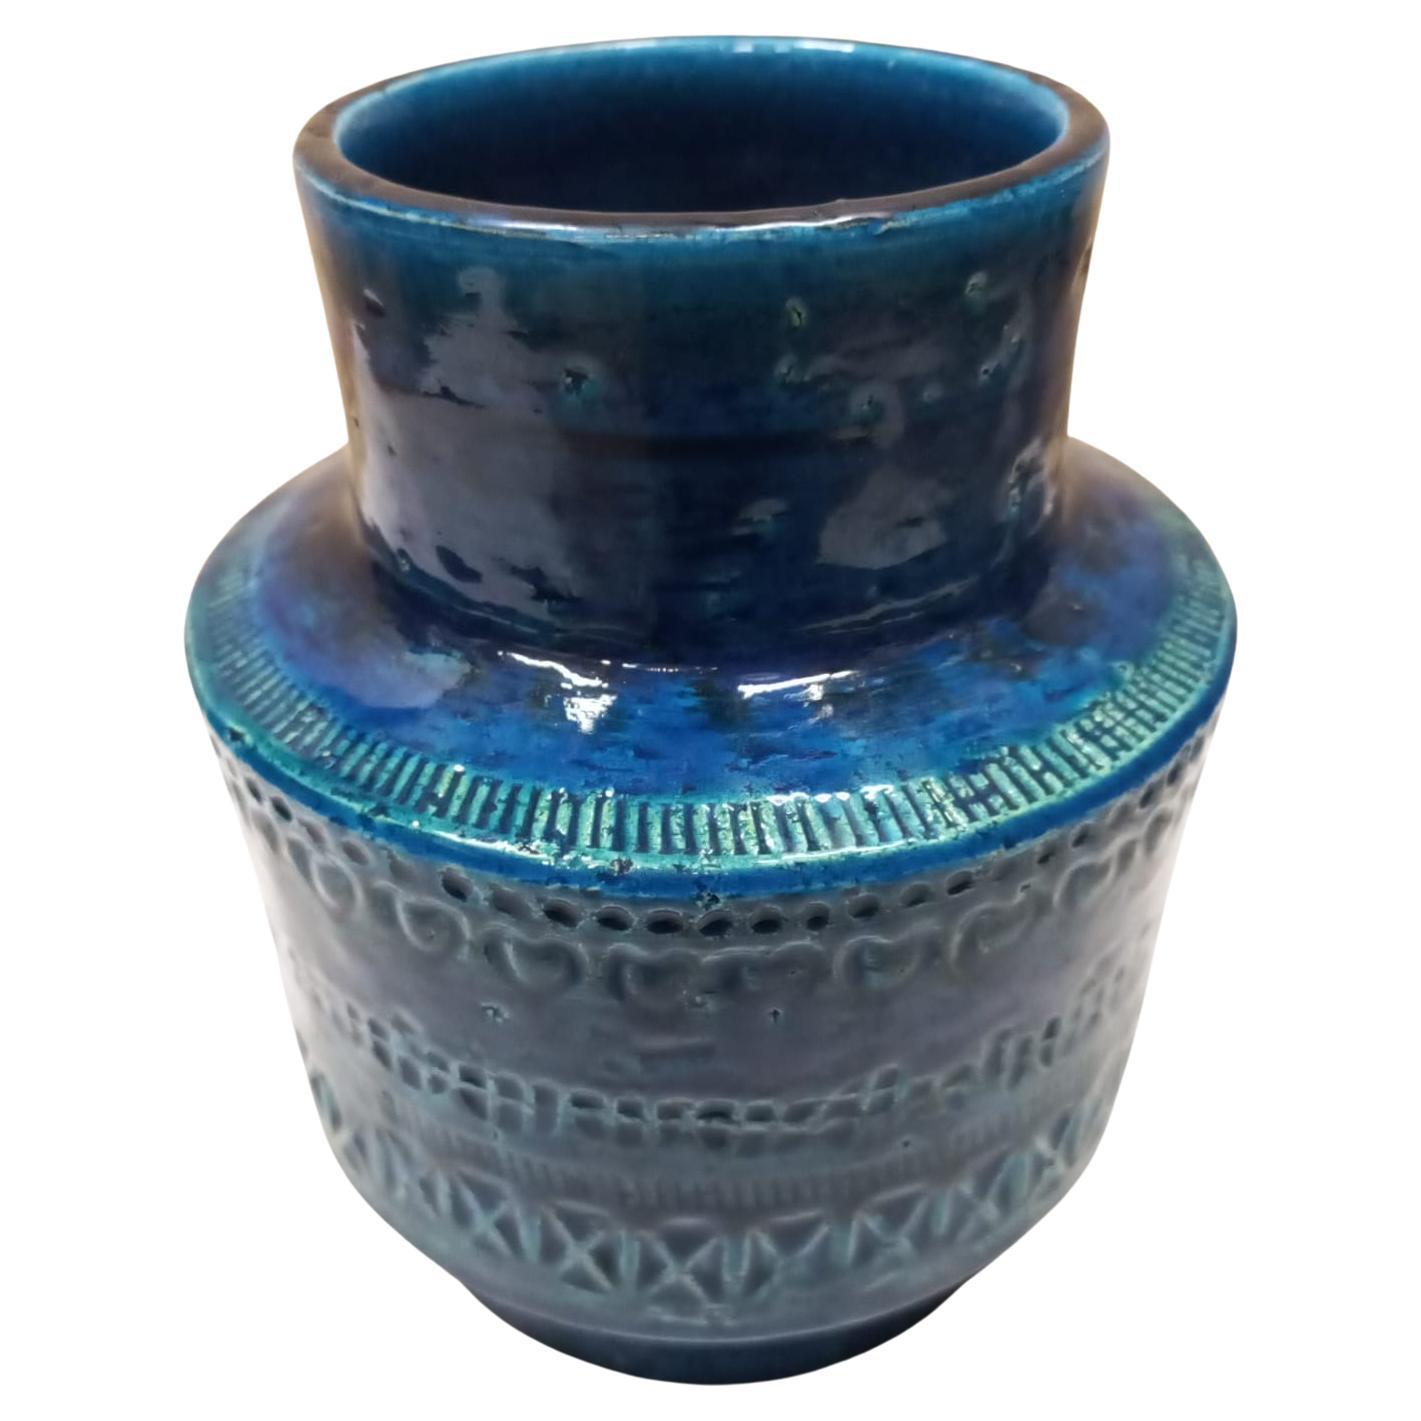 Aldo Londi Circular Ceramic Vase, Blue Glazed, Bitossi, Mid 20th Century